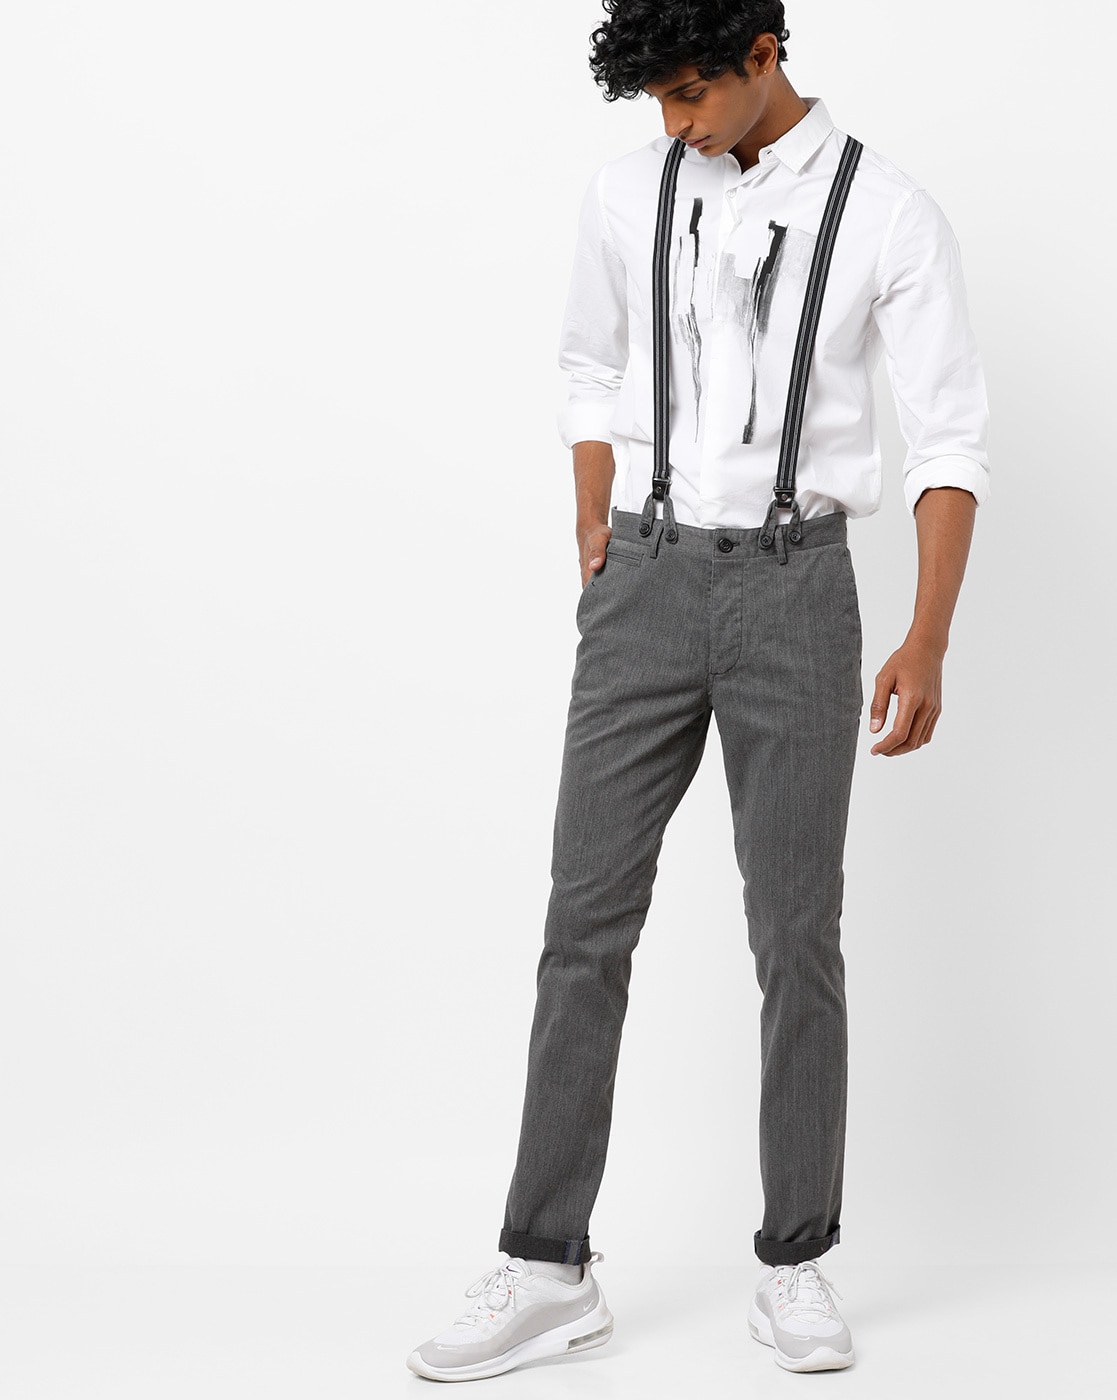 Laidback groomsmen attire idea  gray pants suspenders and bow tie  Michelle Lea Photographie  Blue trousers Blue shirt dress Suspenders